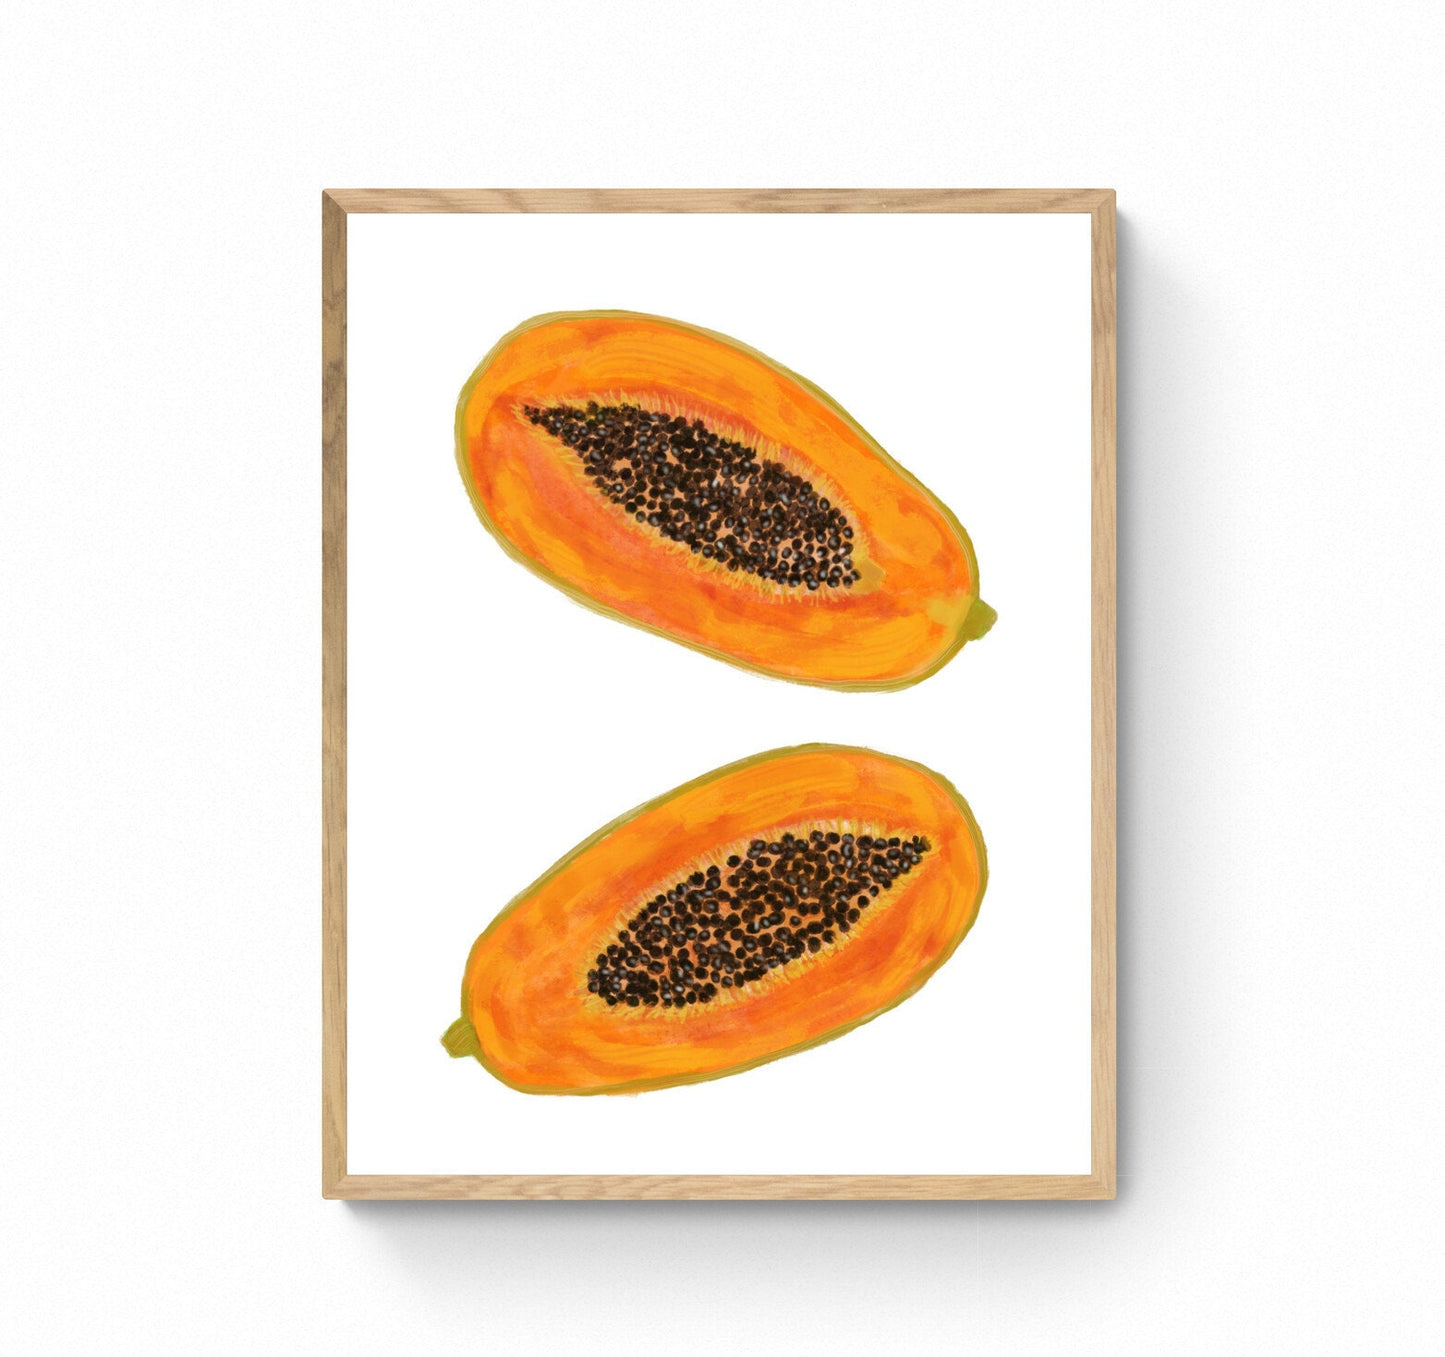 Papaya Art Print, Papaya Wall Art, Kitchen Wall Hanging, Dining Room Decor, Tropical Fruit Painting, Fruit Illustration, Farmhouse Decor